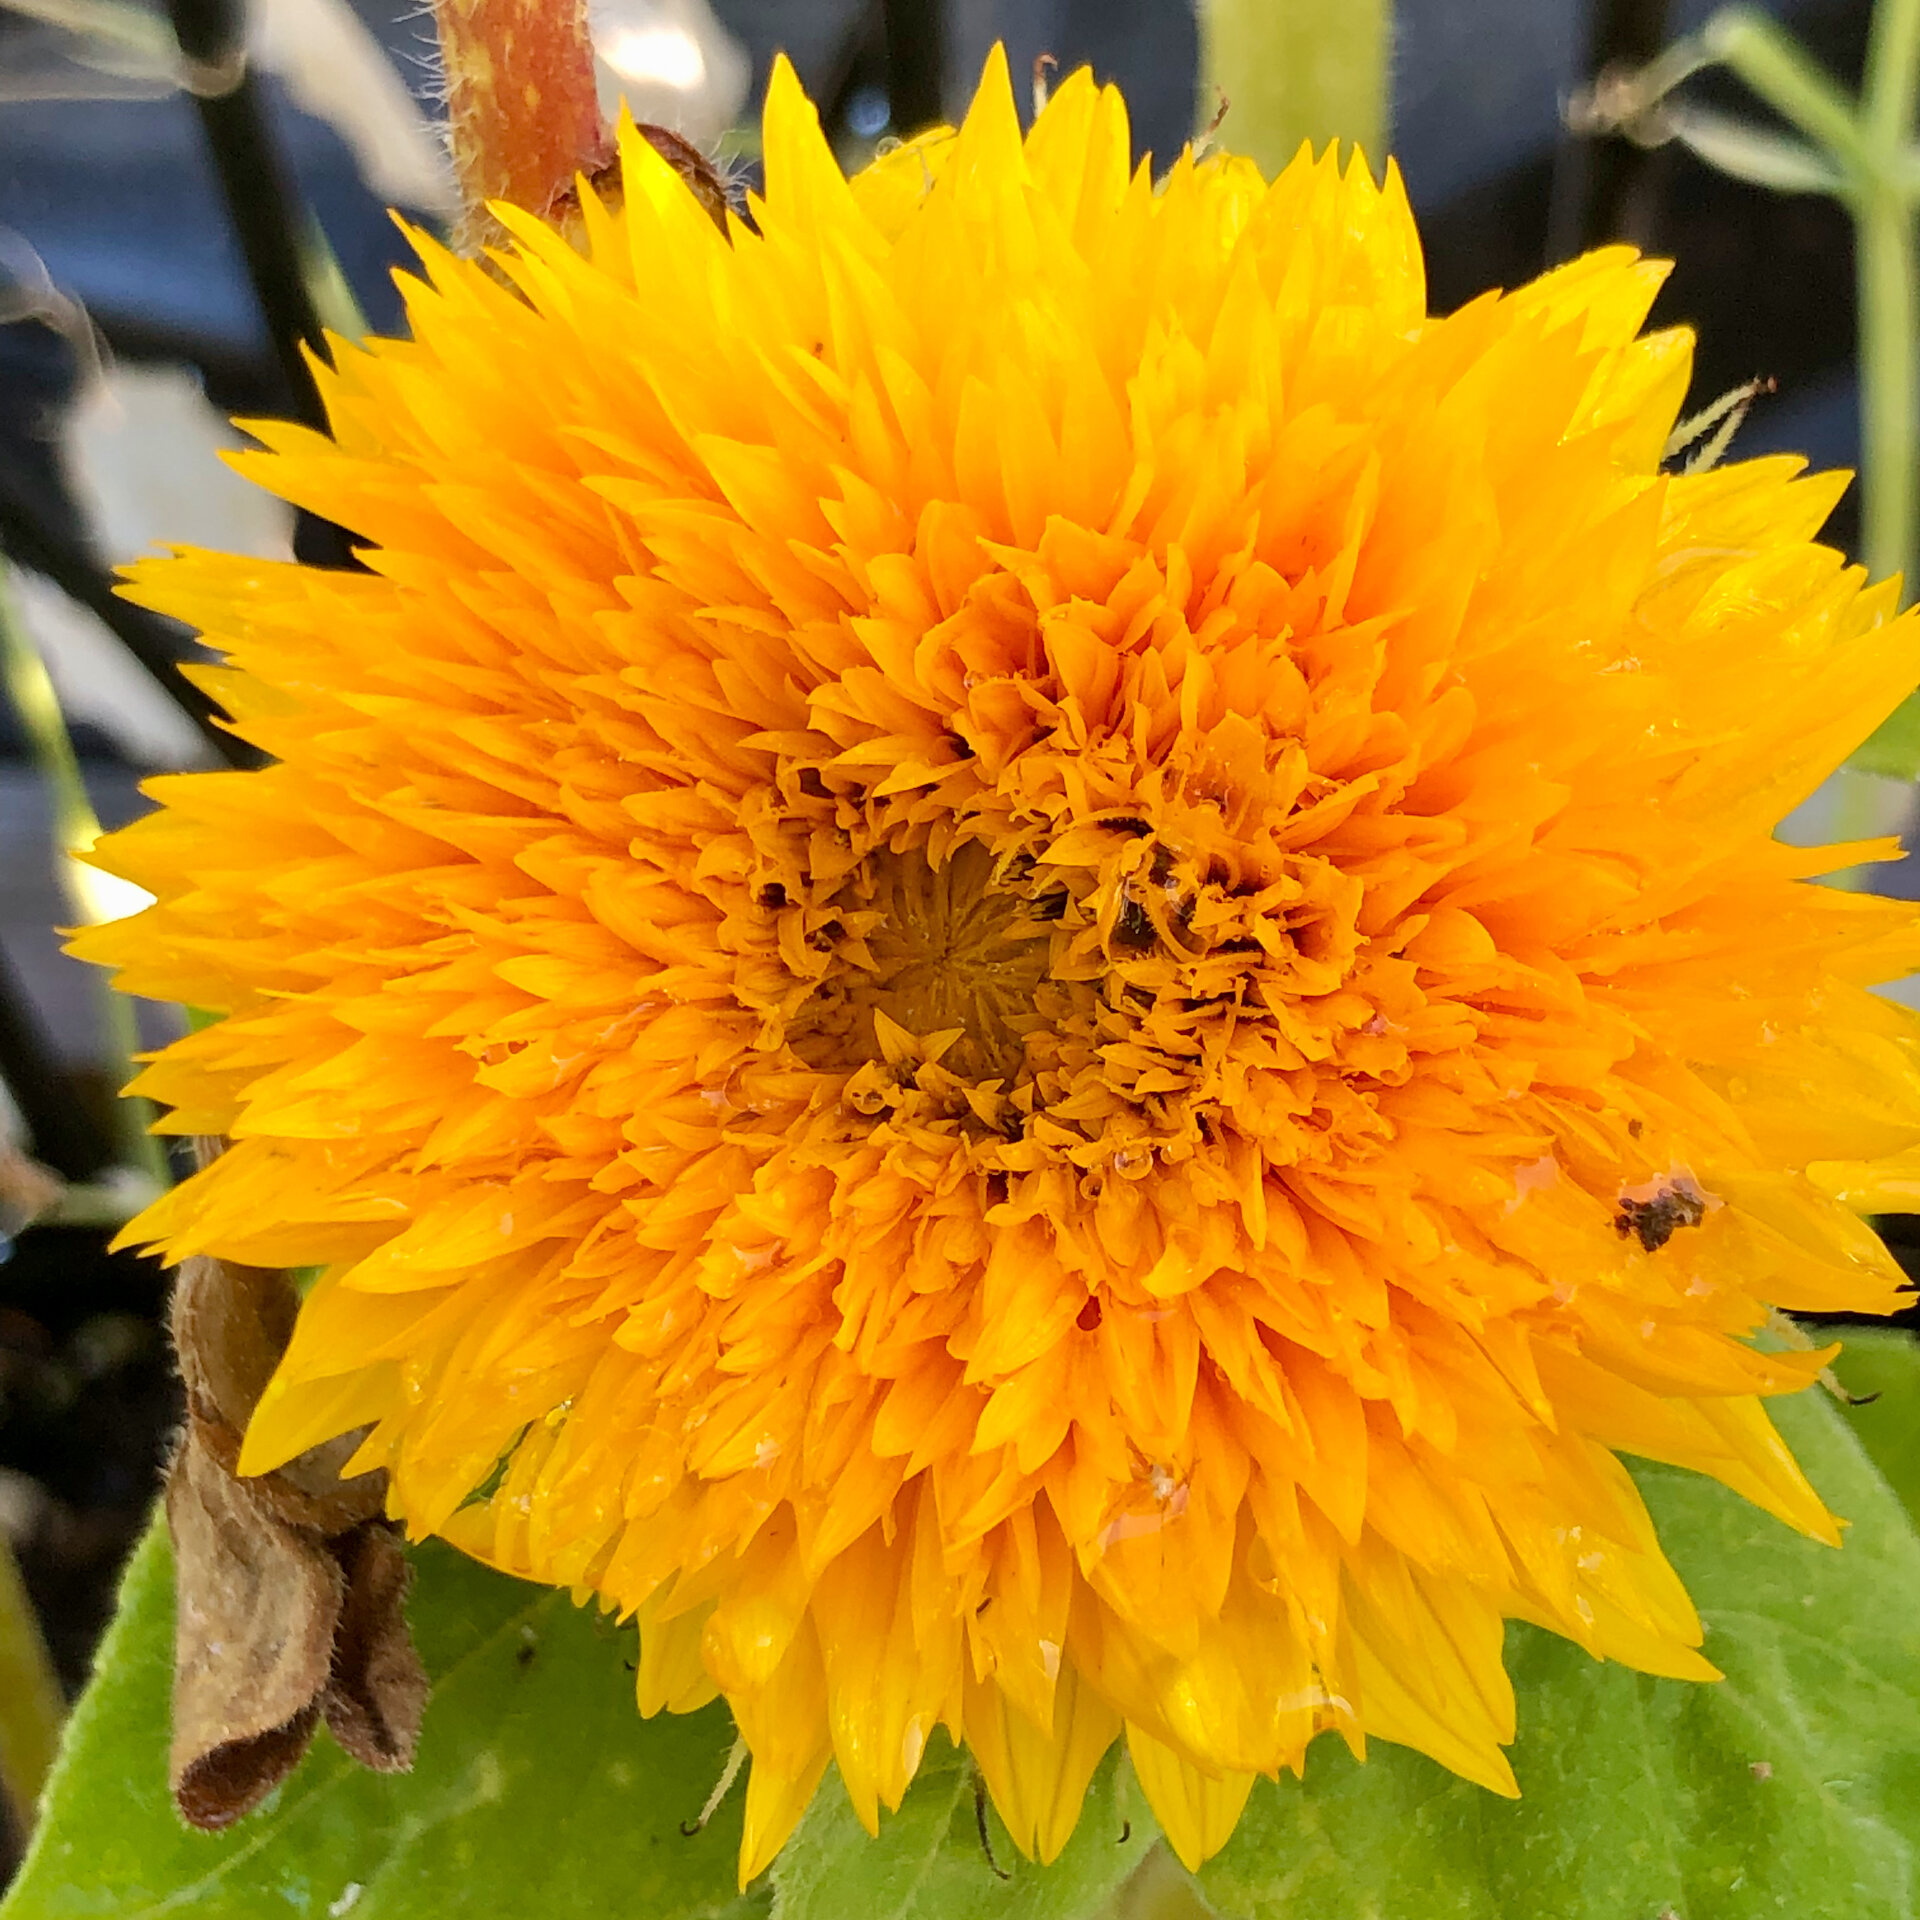 Late July - Sunflowers